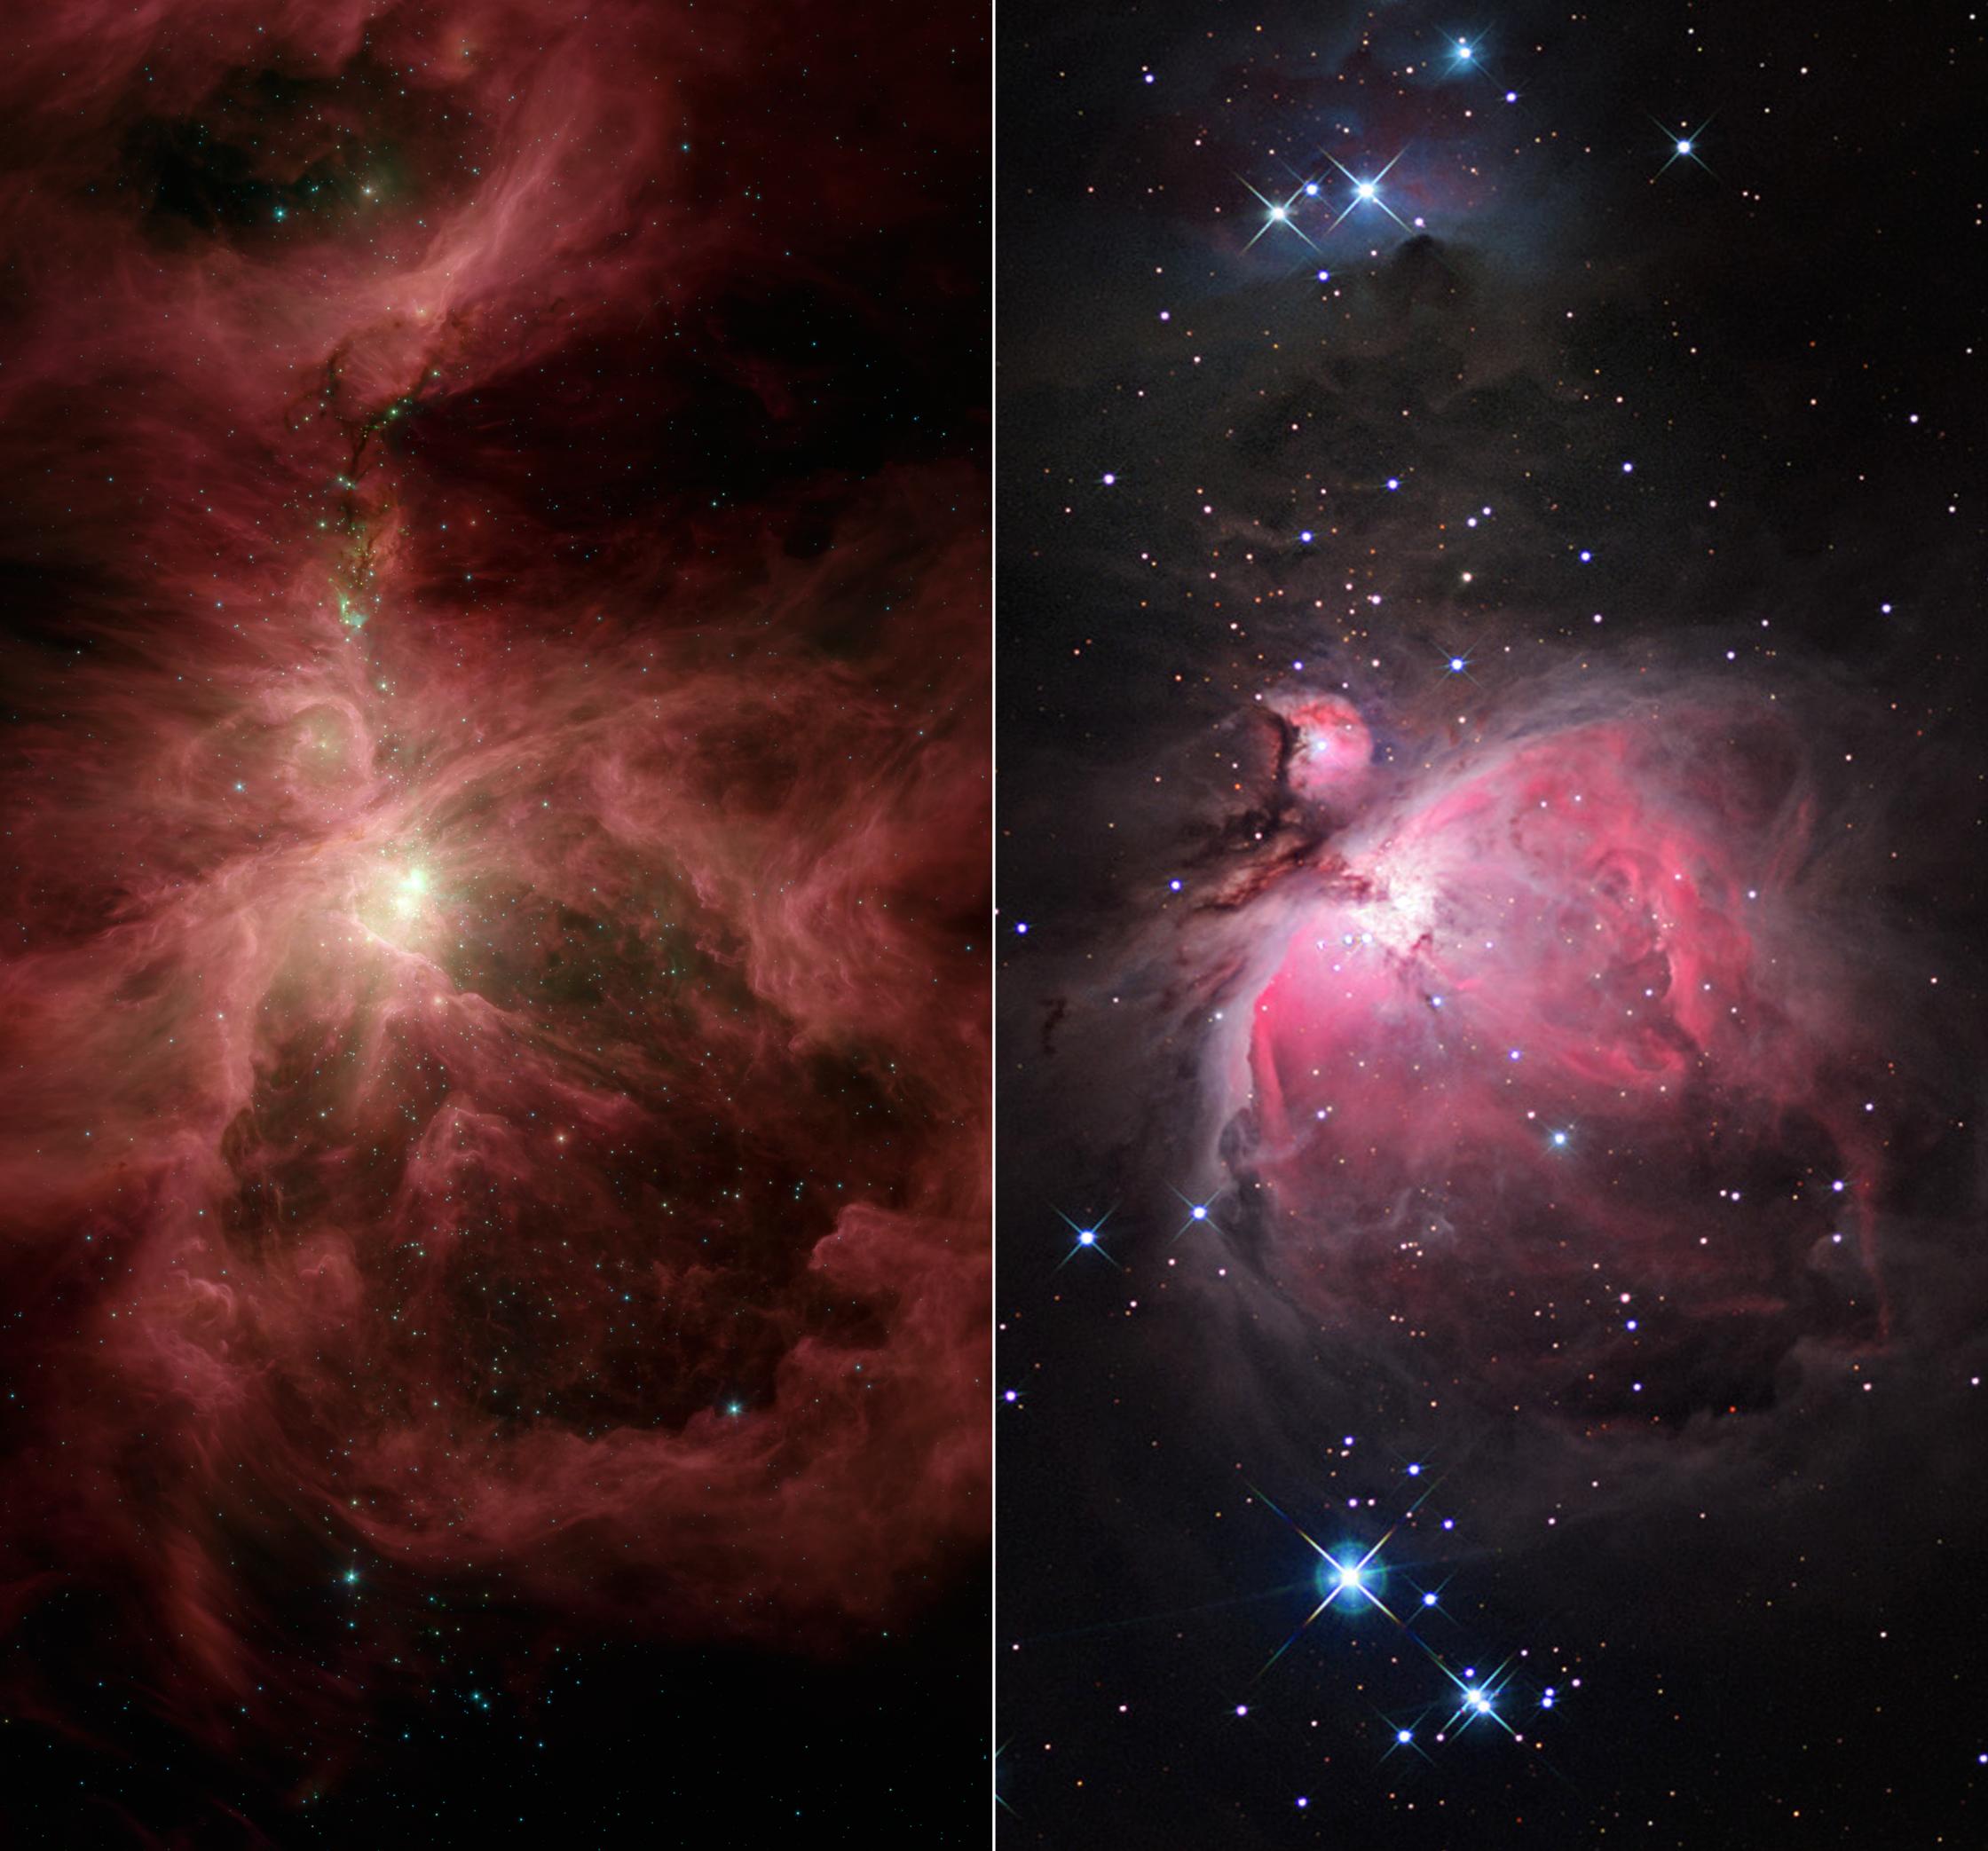 Orion Nebula Infrared